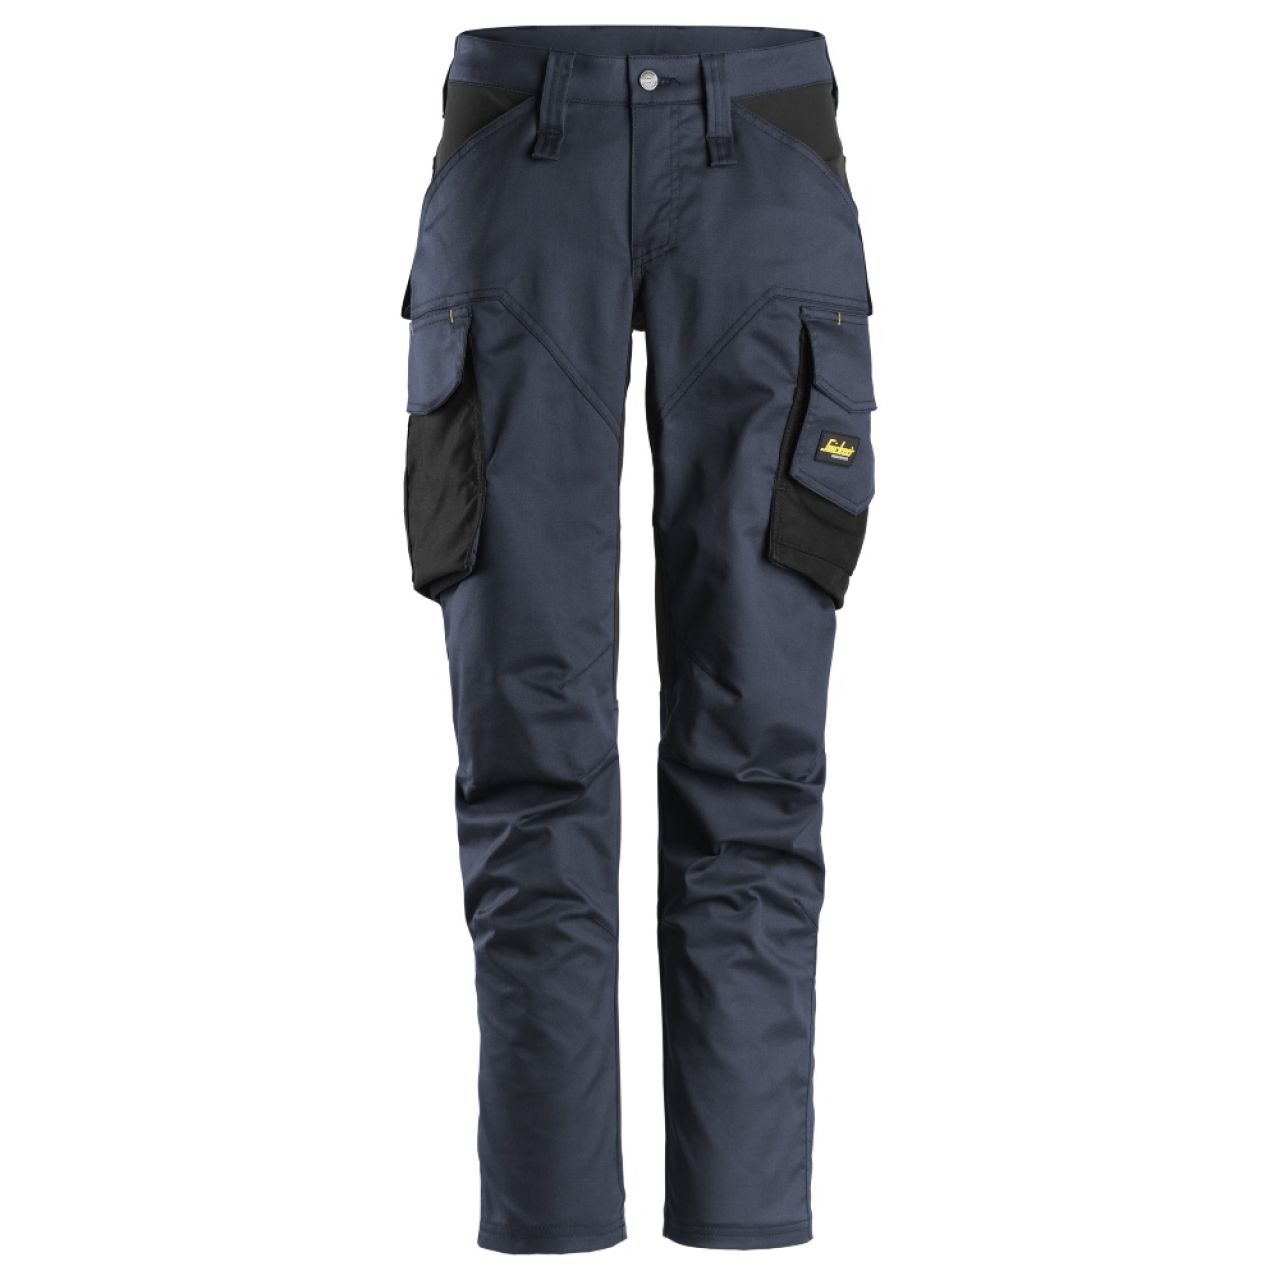 6703 Pantalones largos de trabajo elásticos para mujer con bolsillos para rodilleras AllroundWork azul marino-negro talla 54